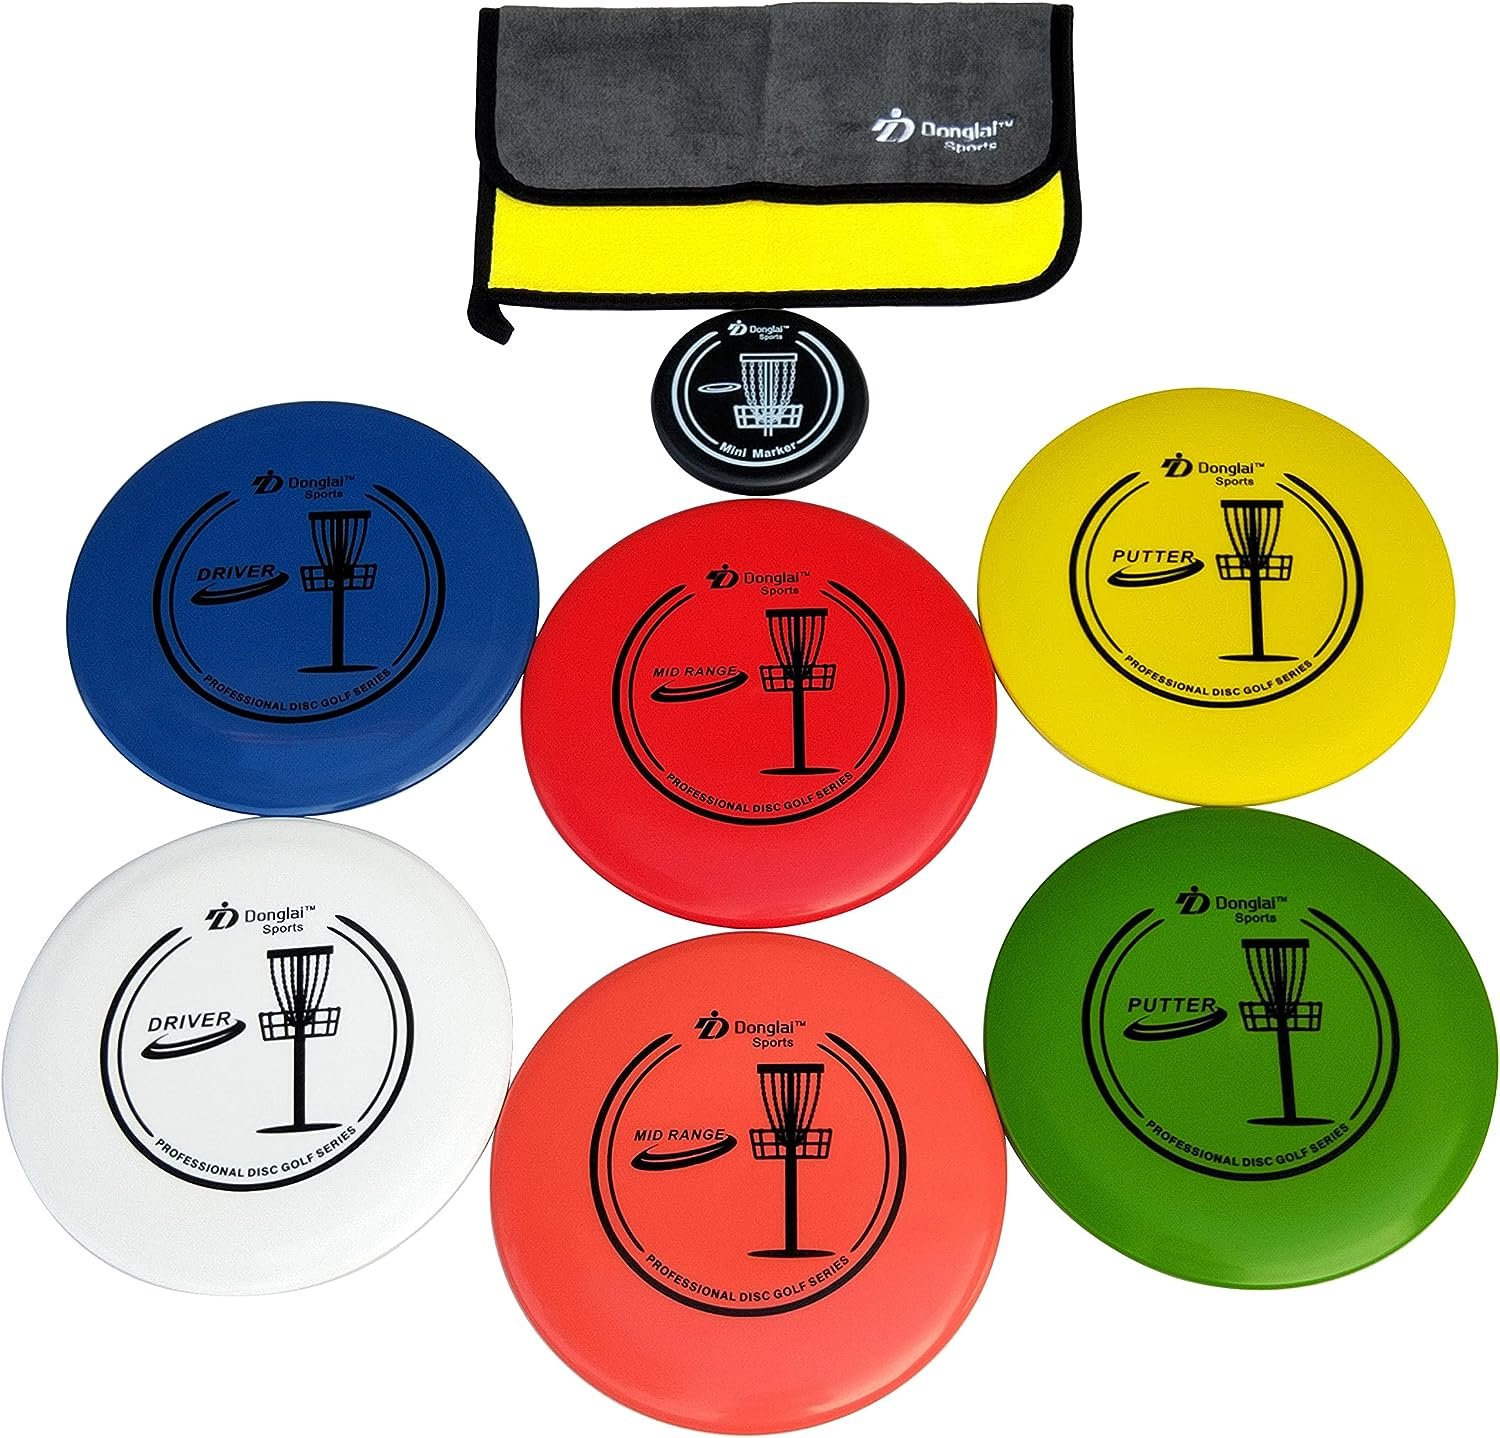 DDonglai Disc Golf Starter Set with 2pcs Driver, 2pcs Mid-Range, 2pcs Putter, 1pc Mini Marker and Towel